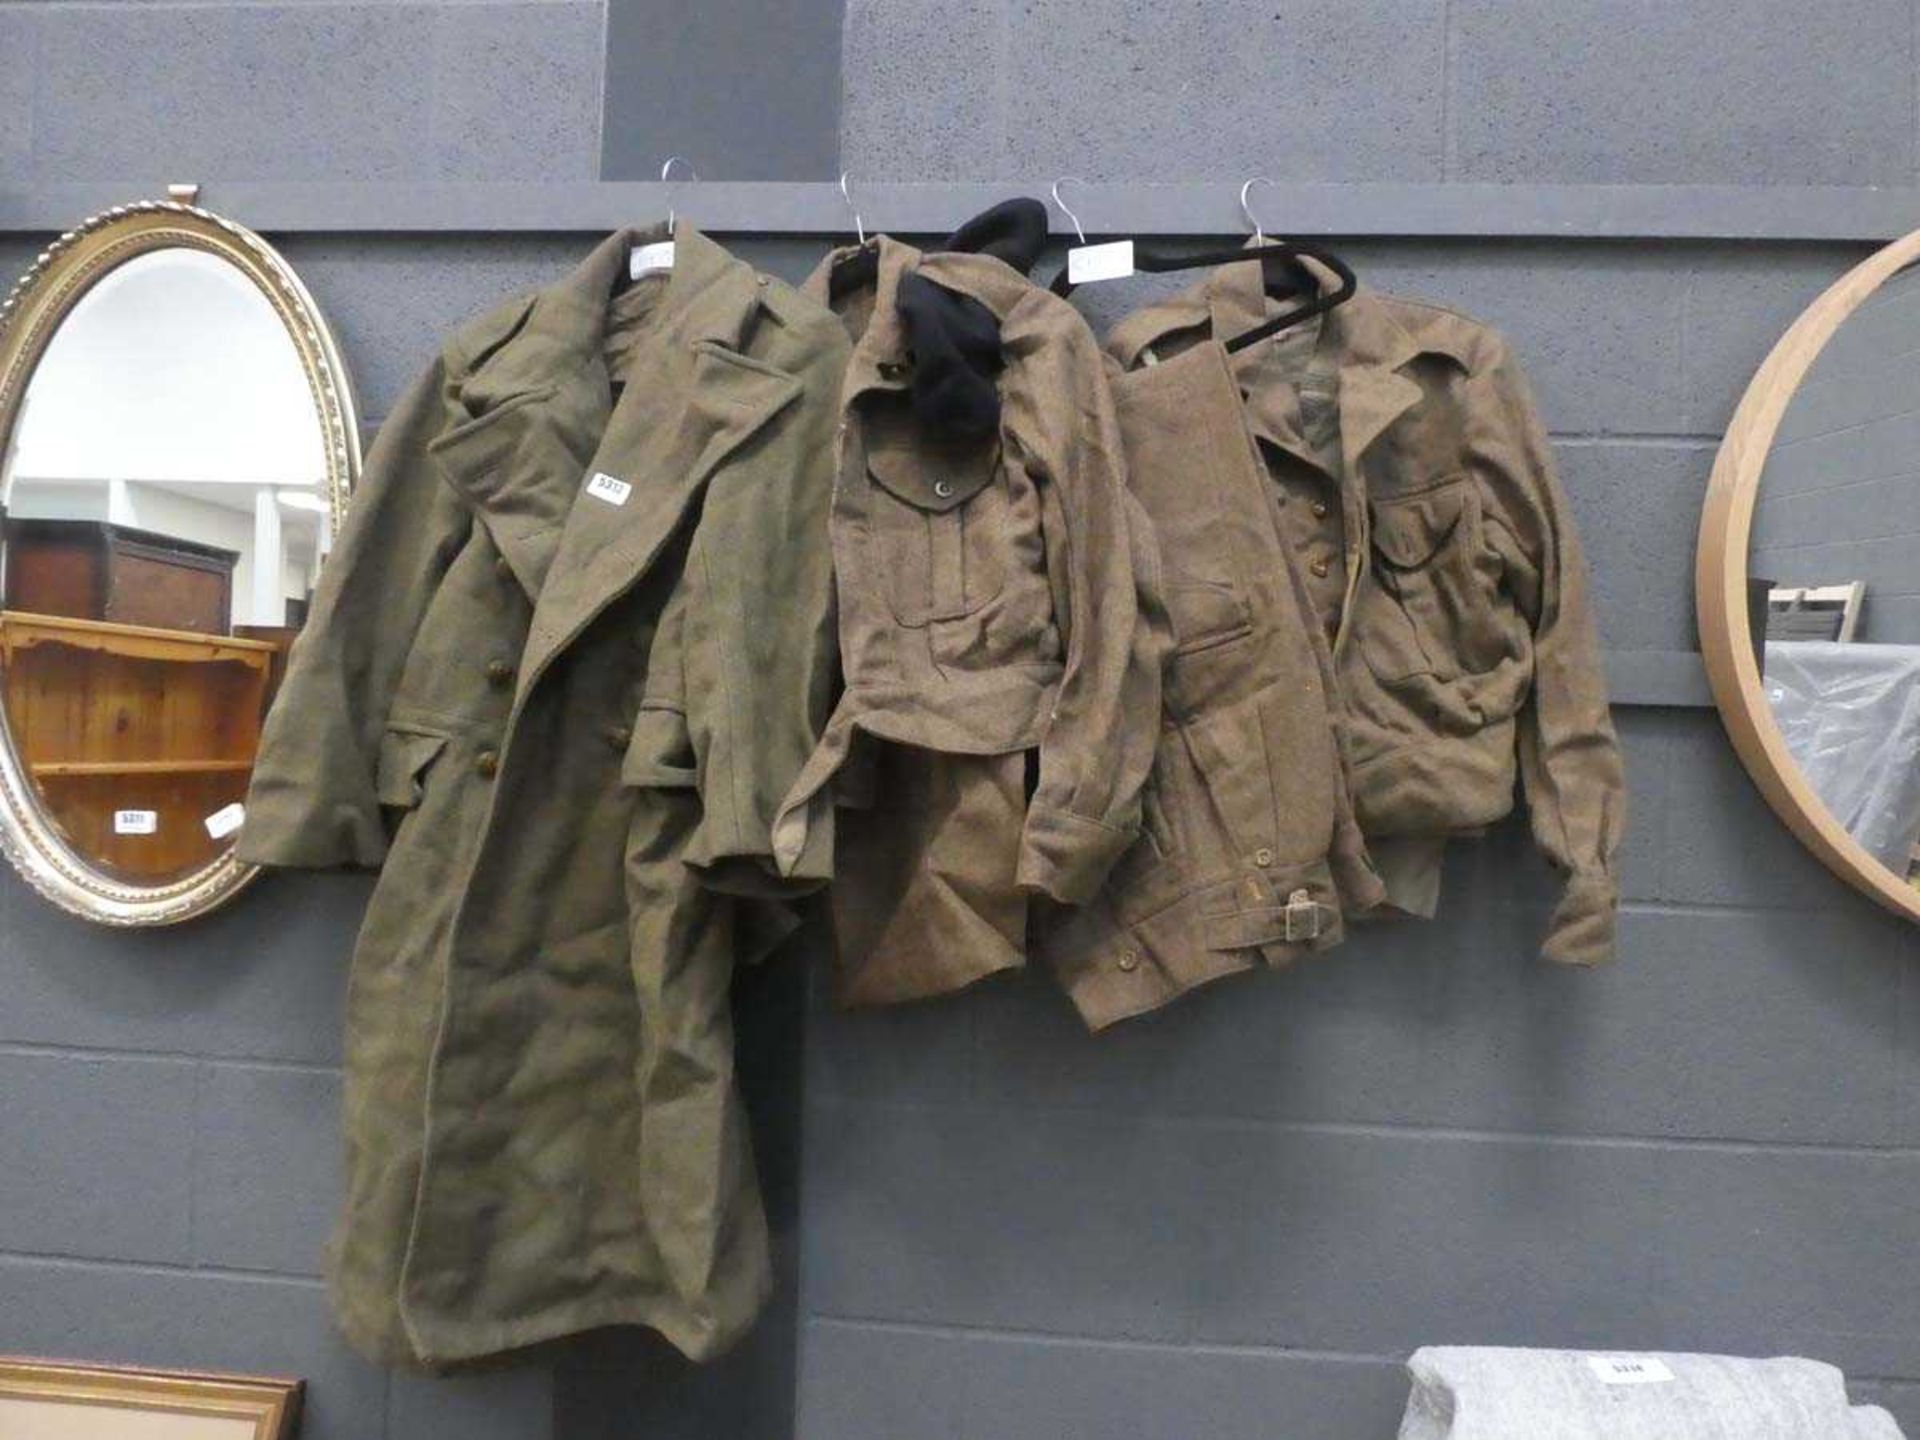 Quantity of military clothing plus kit bags